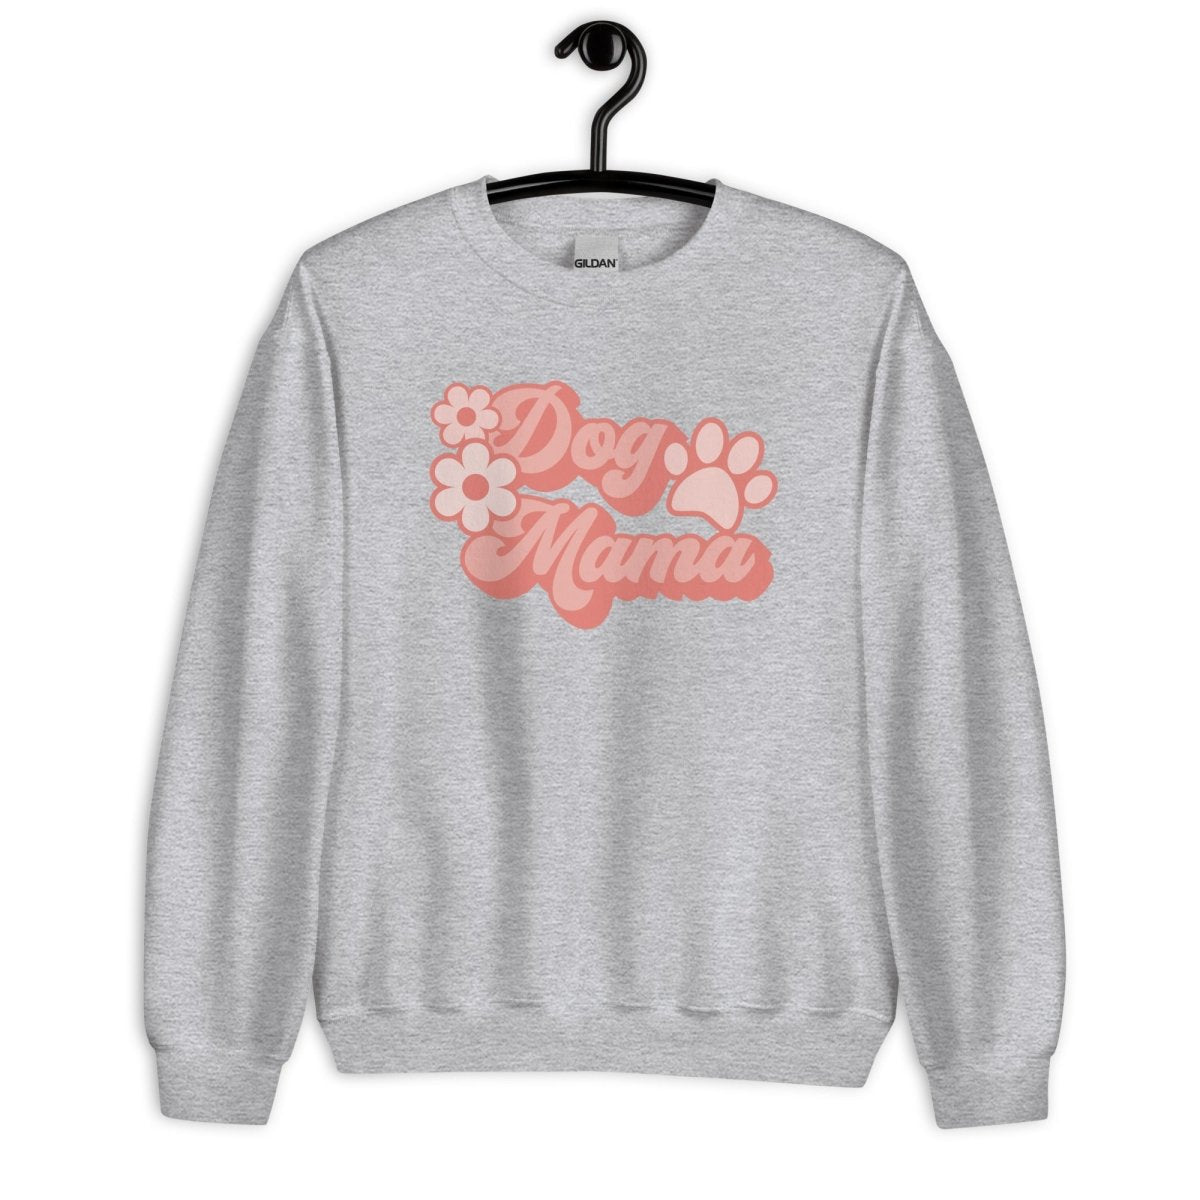 Dog Mama Retro Sweatshirt - DoggyLoveandMore